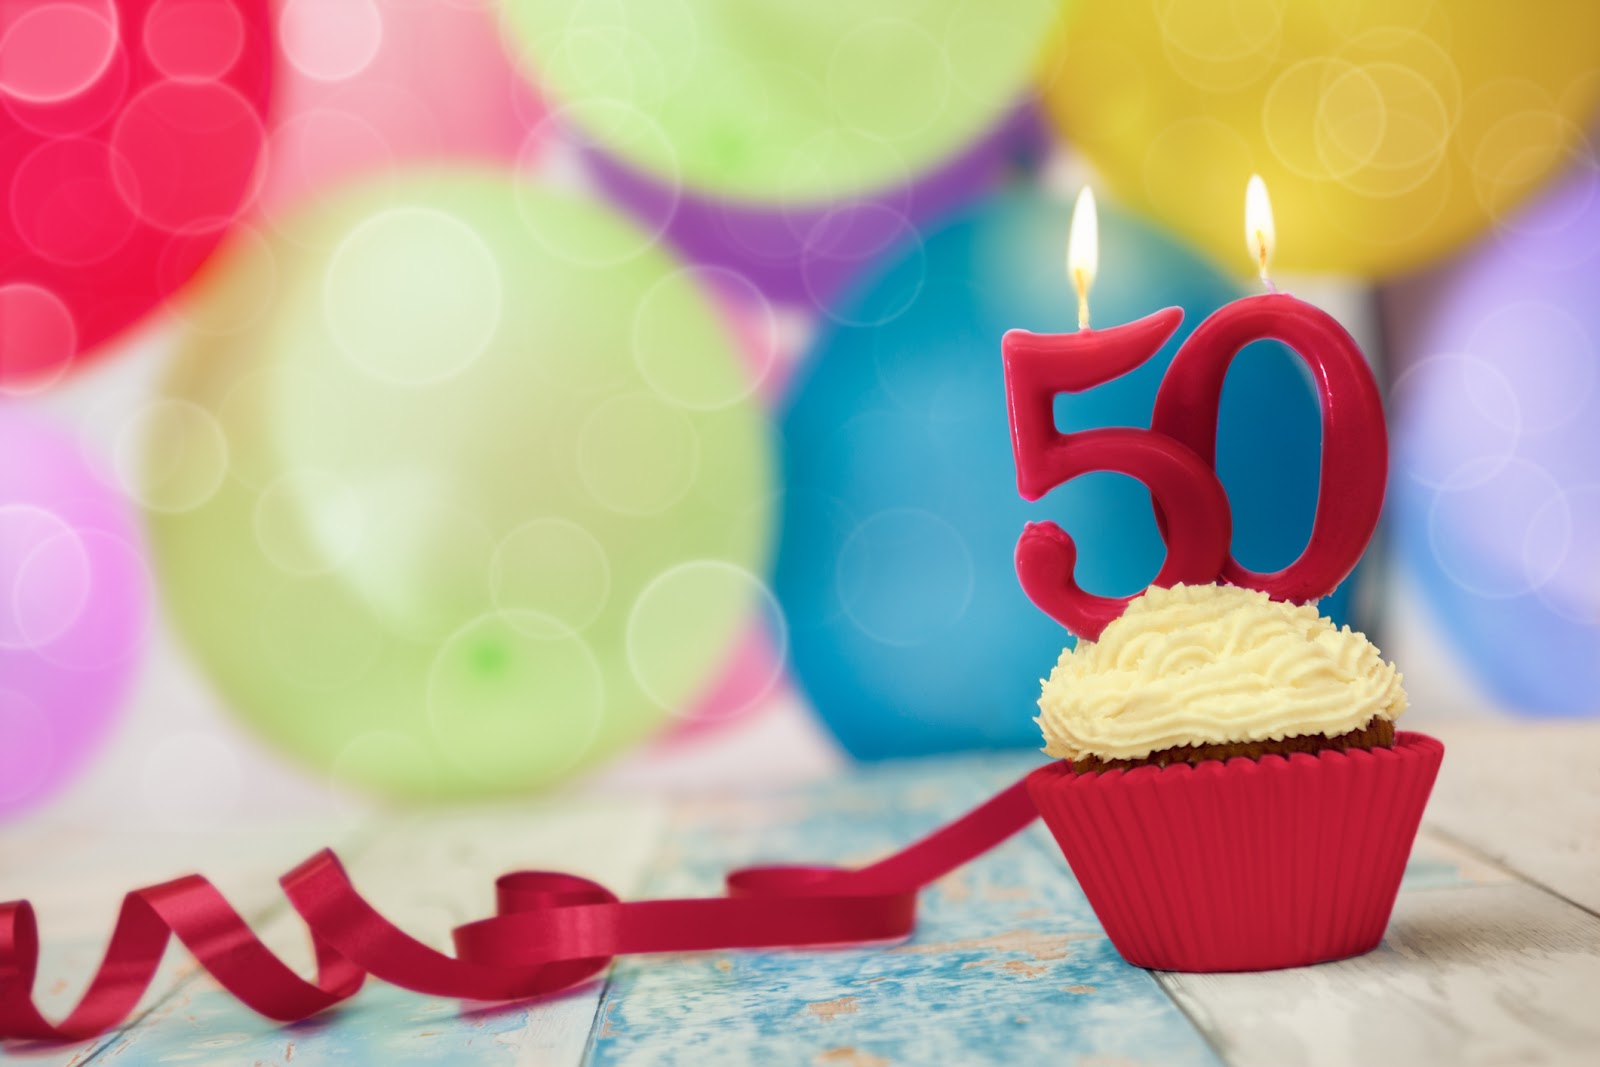 turning 50 cupcake and balloons